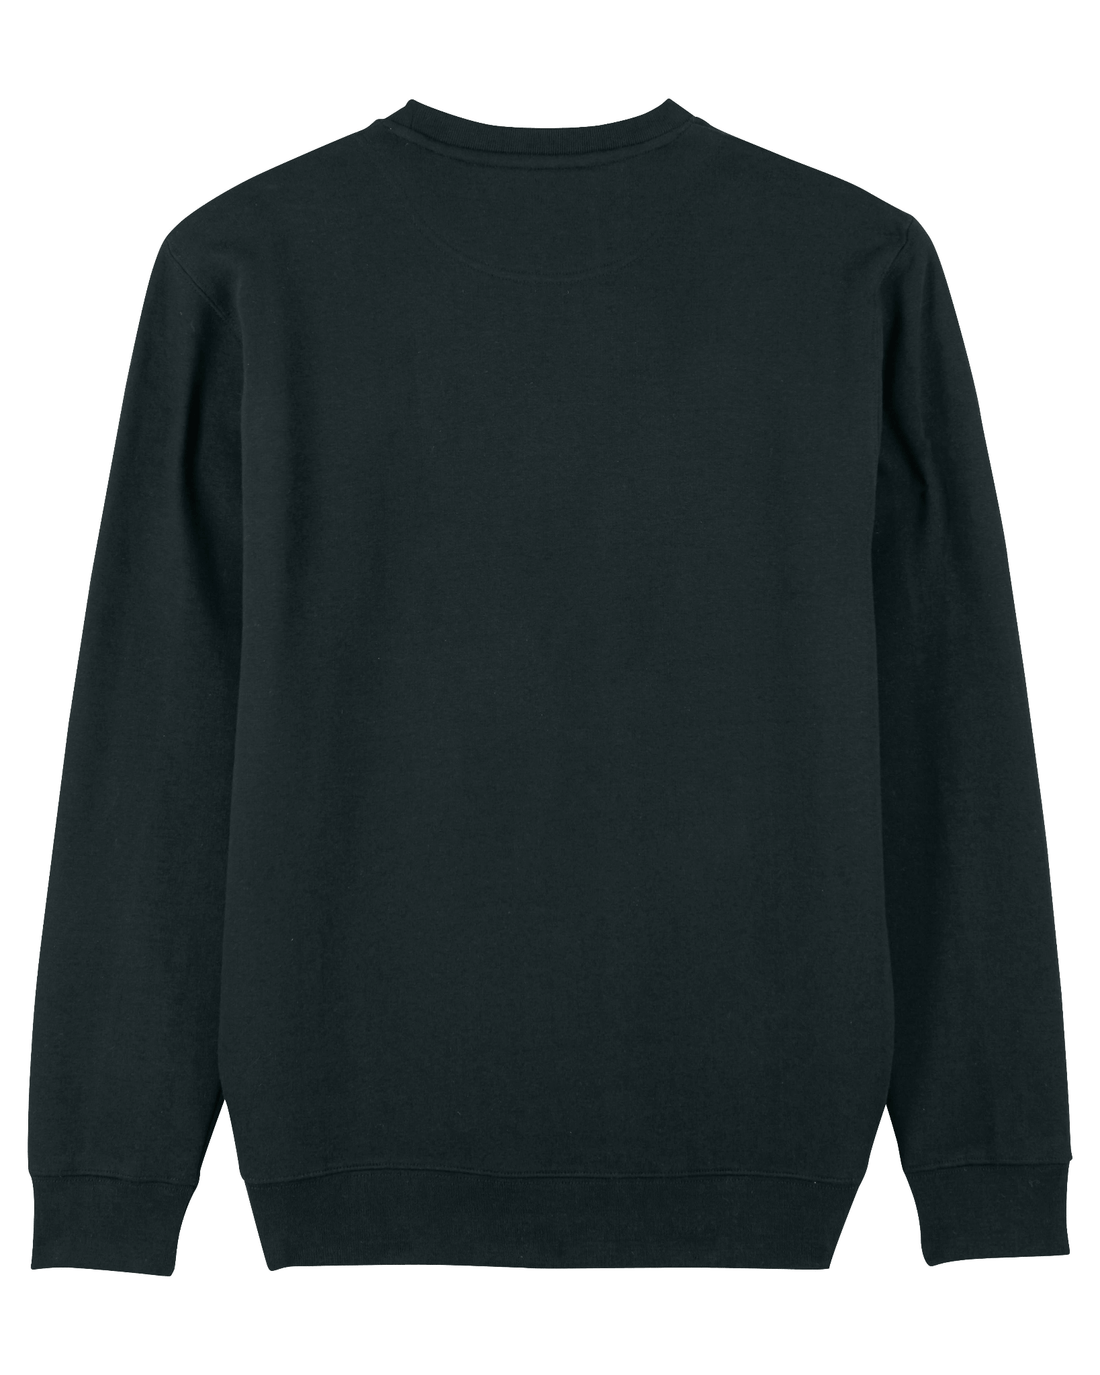 Black Skater Sweatshirt, Skate Ramp Back Print